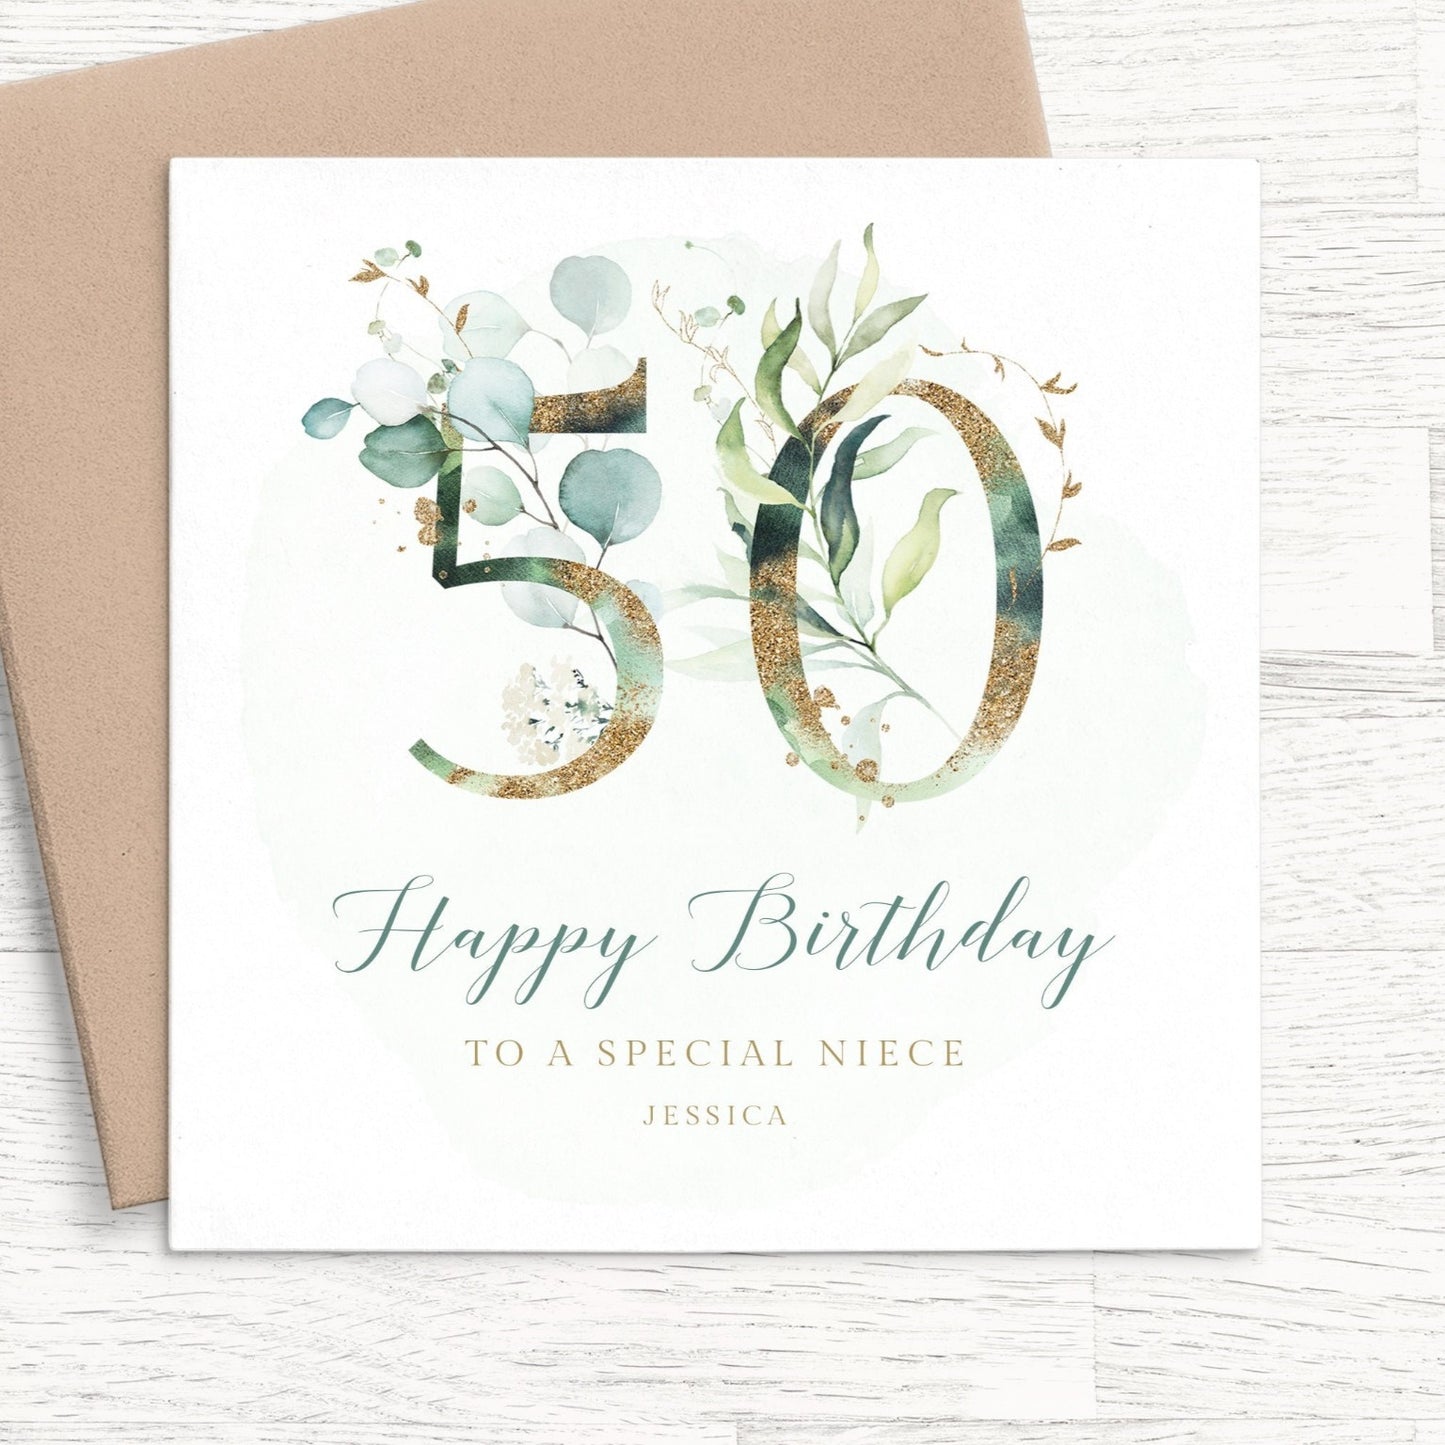 niece eucalyptus 50th birthday card personalised smooth matte white cardstock kraft brown envelope